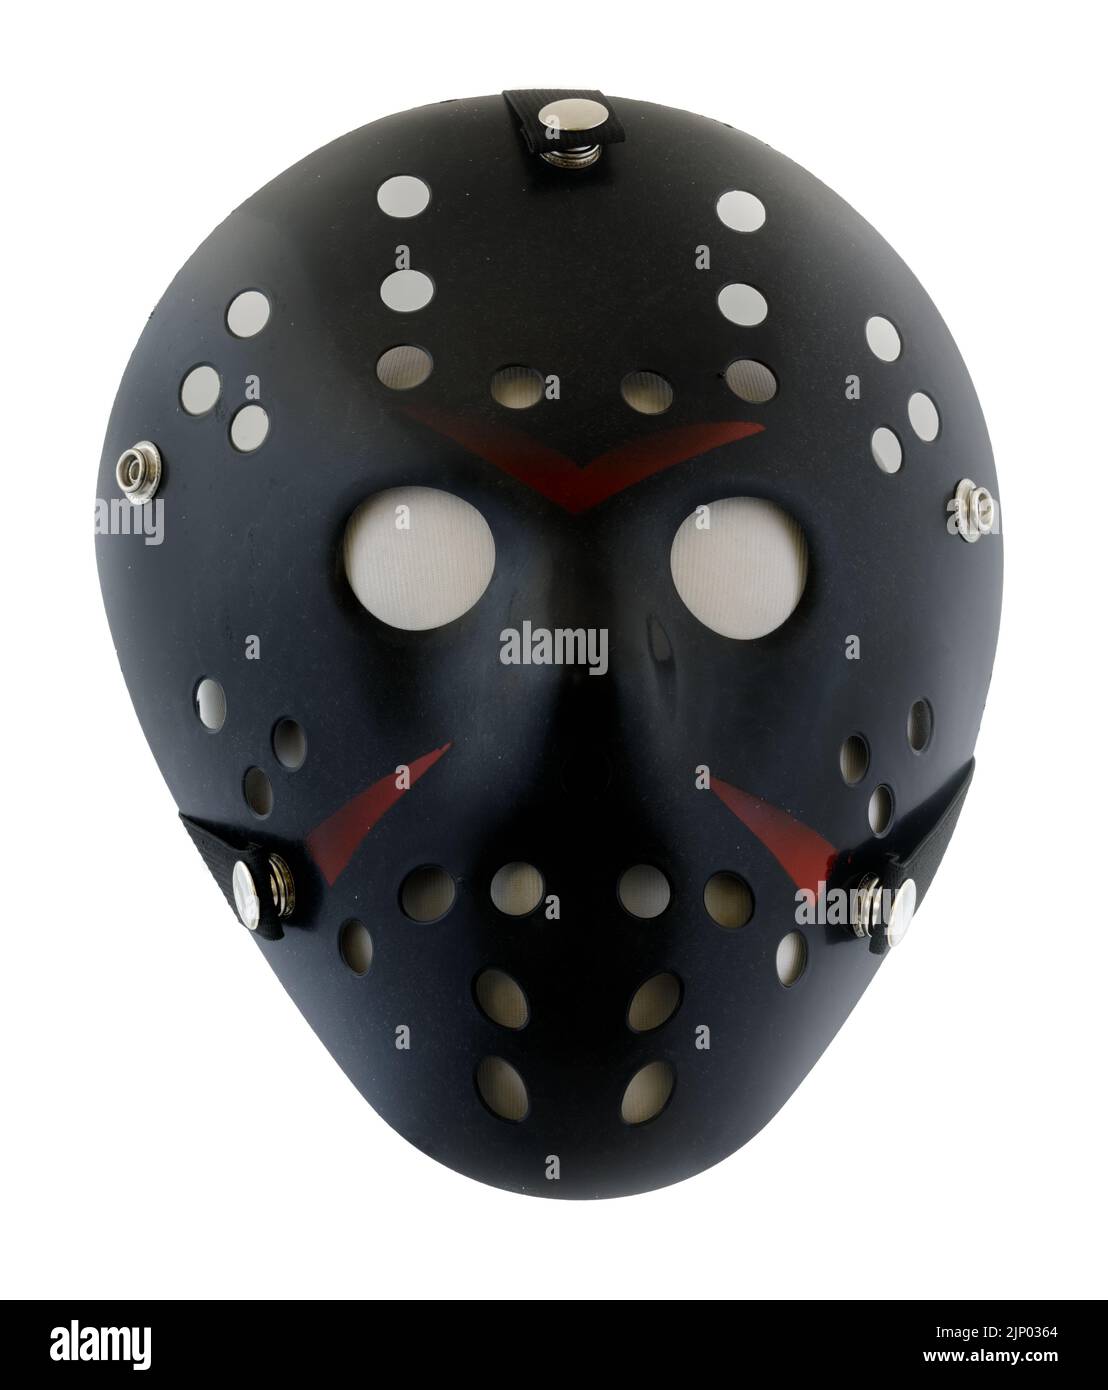 Horror Scary Hockey Halloween Mask Isolated on White Stock Photo